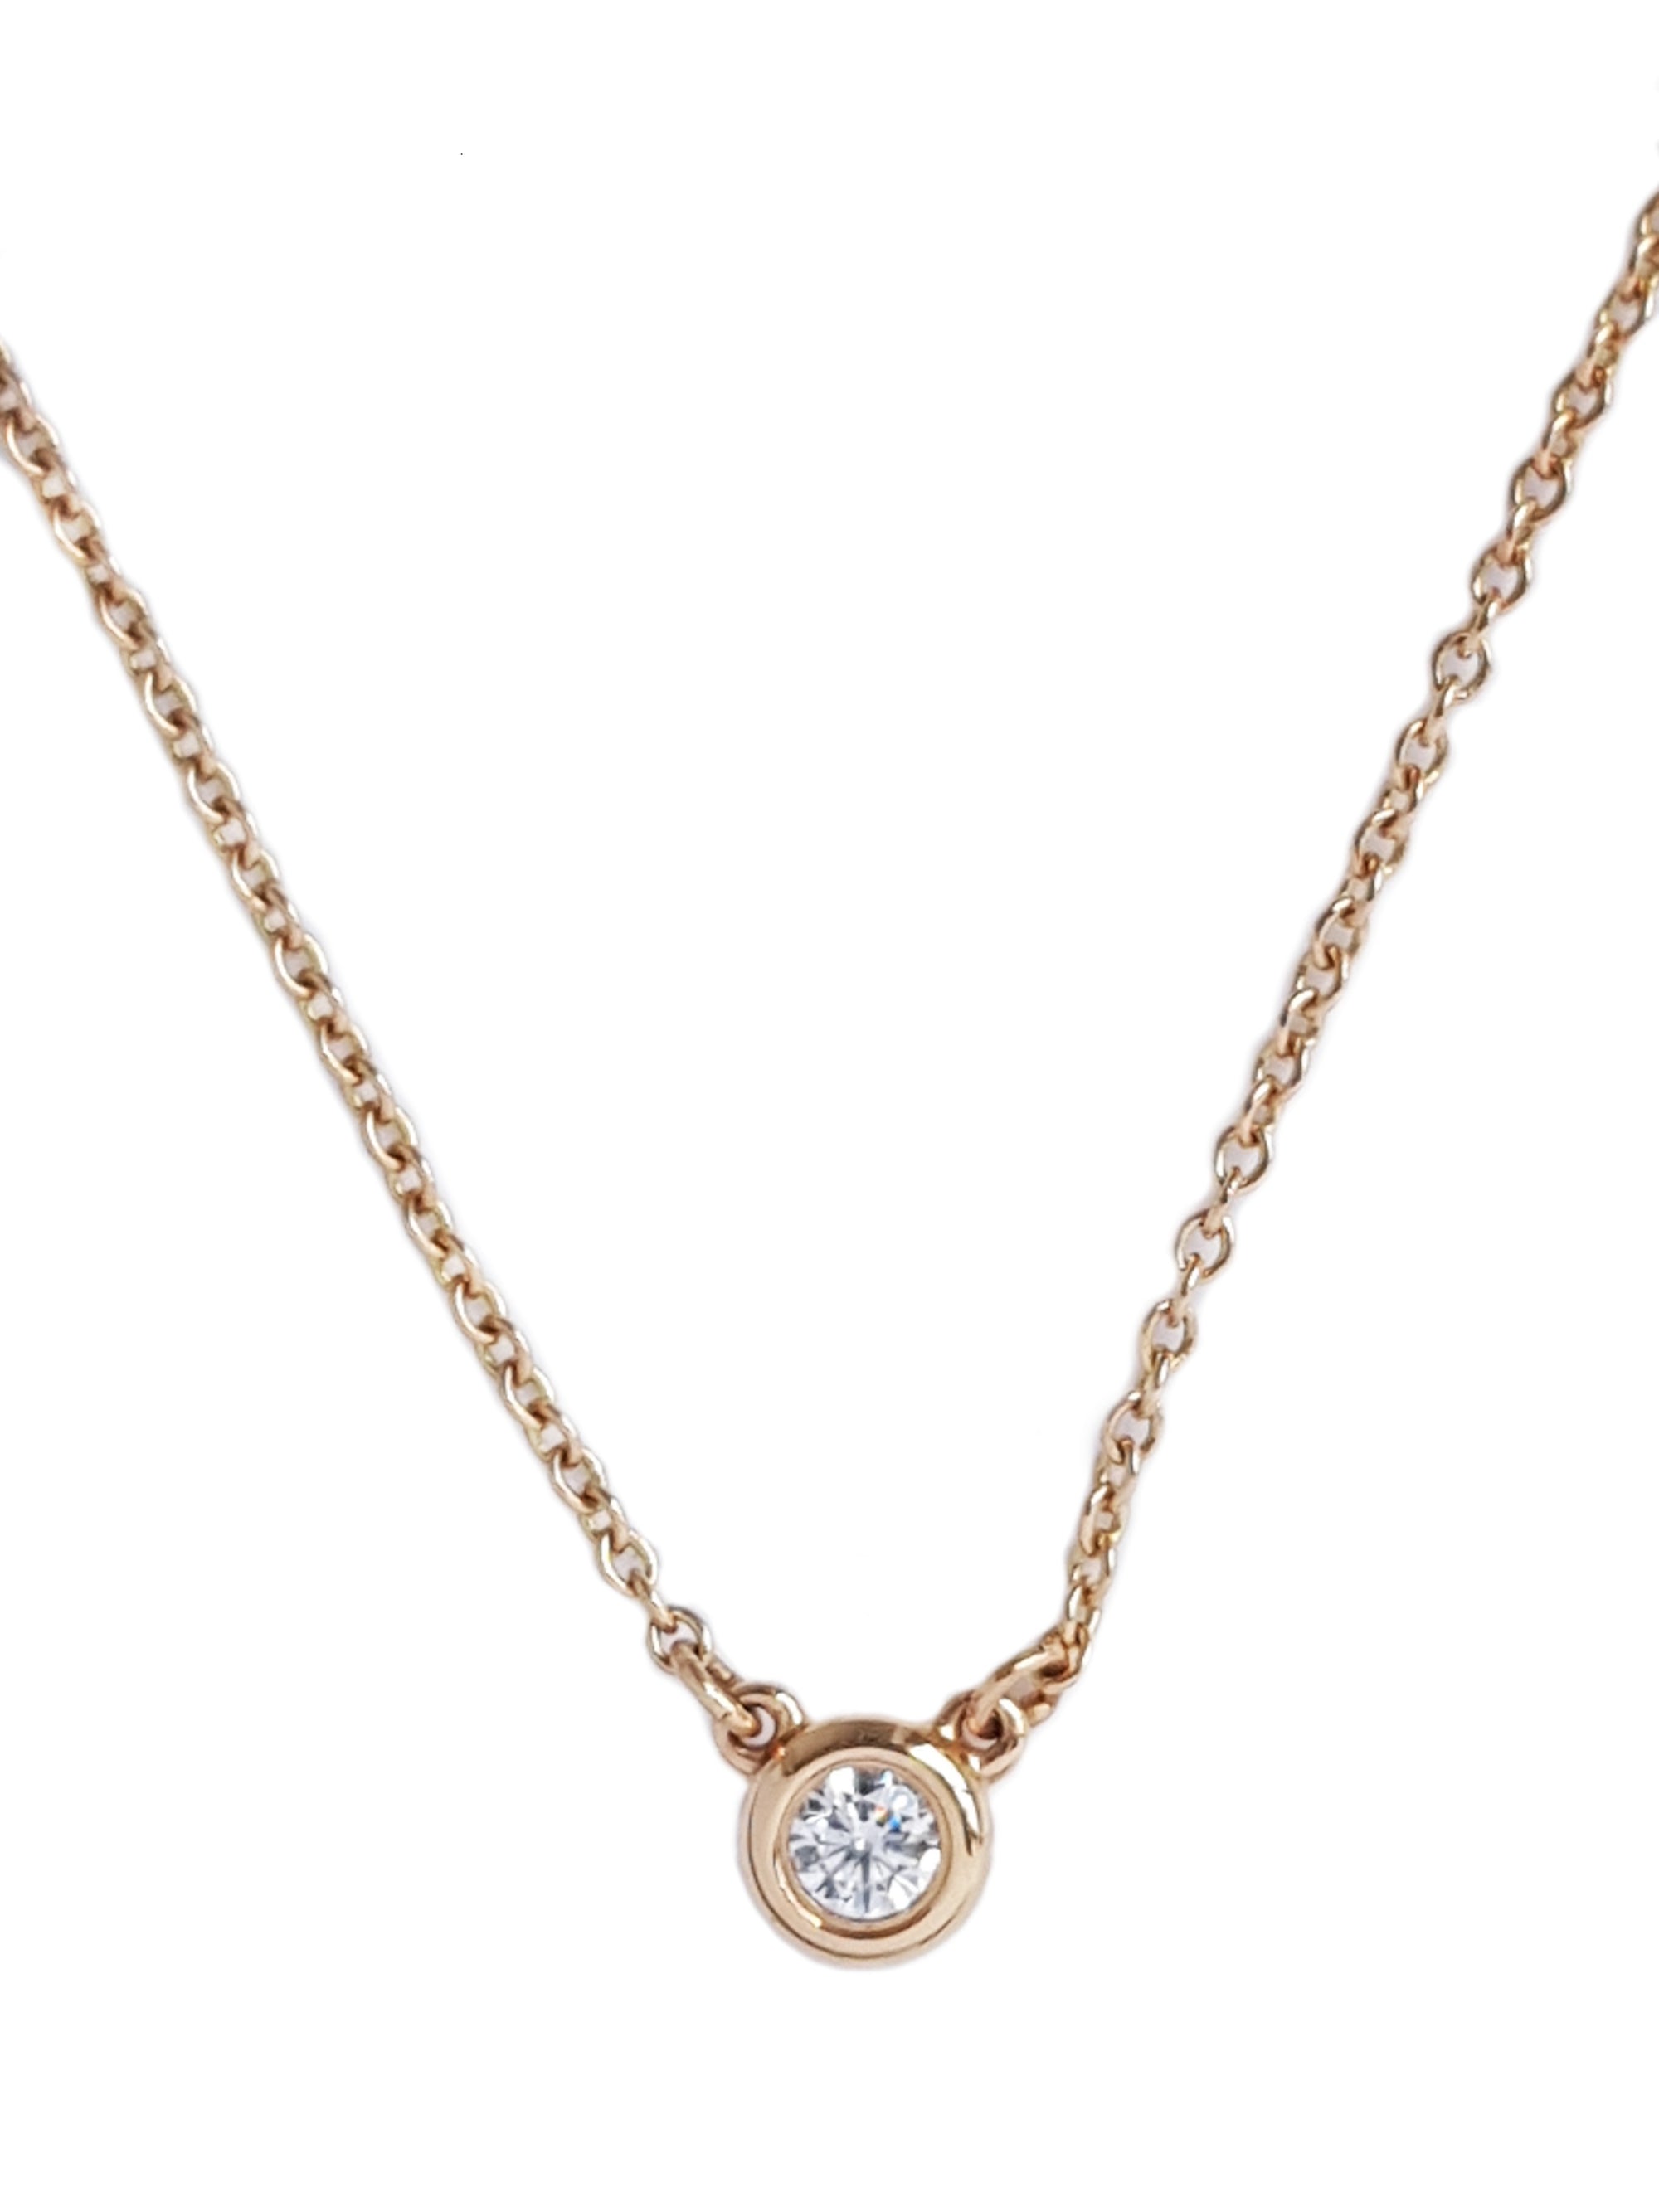 Pre-Loved Jewelry Tiffany Elsa Peretti Diamonds by the Yard 3 diamond  Necklace .51 ct 18k Gold $6k NEW 2920 - Blue Chip Jewelry